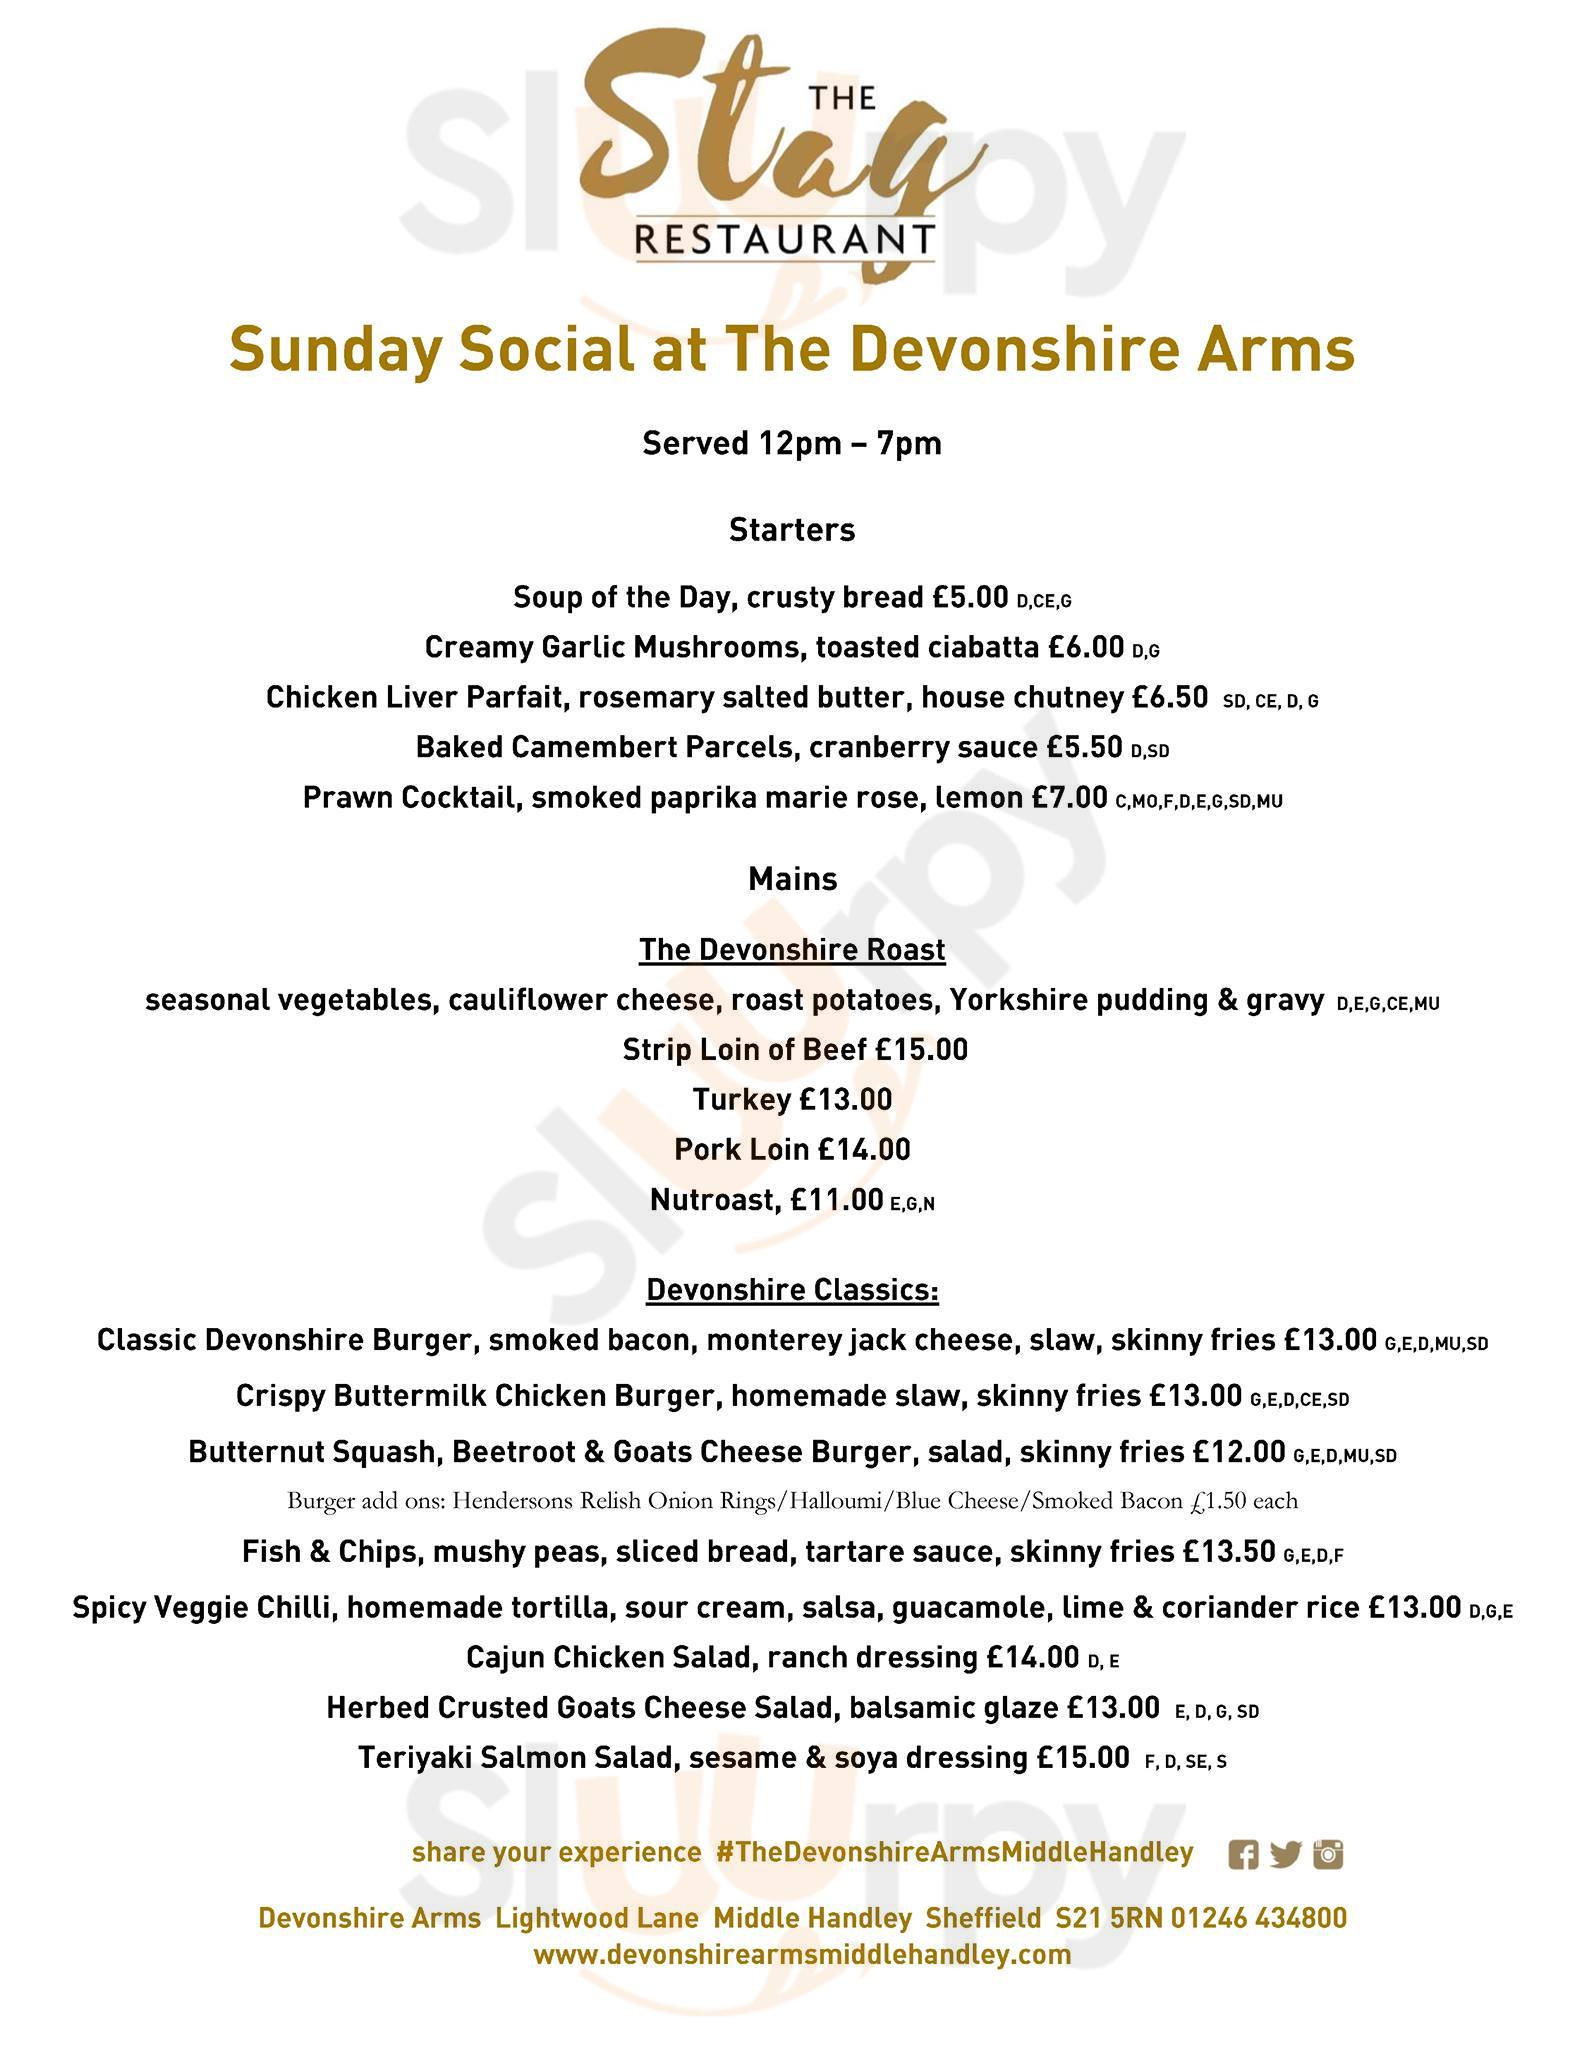 The Devonshire Arms Middle Handley | Restaurant Sheffield Menu - 1